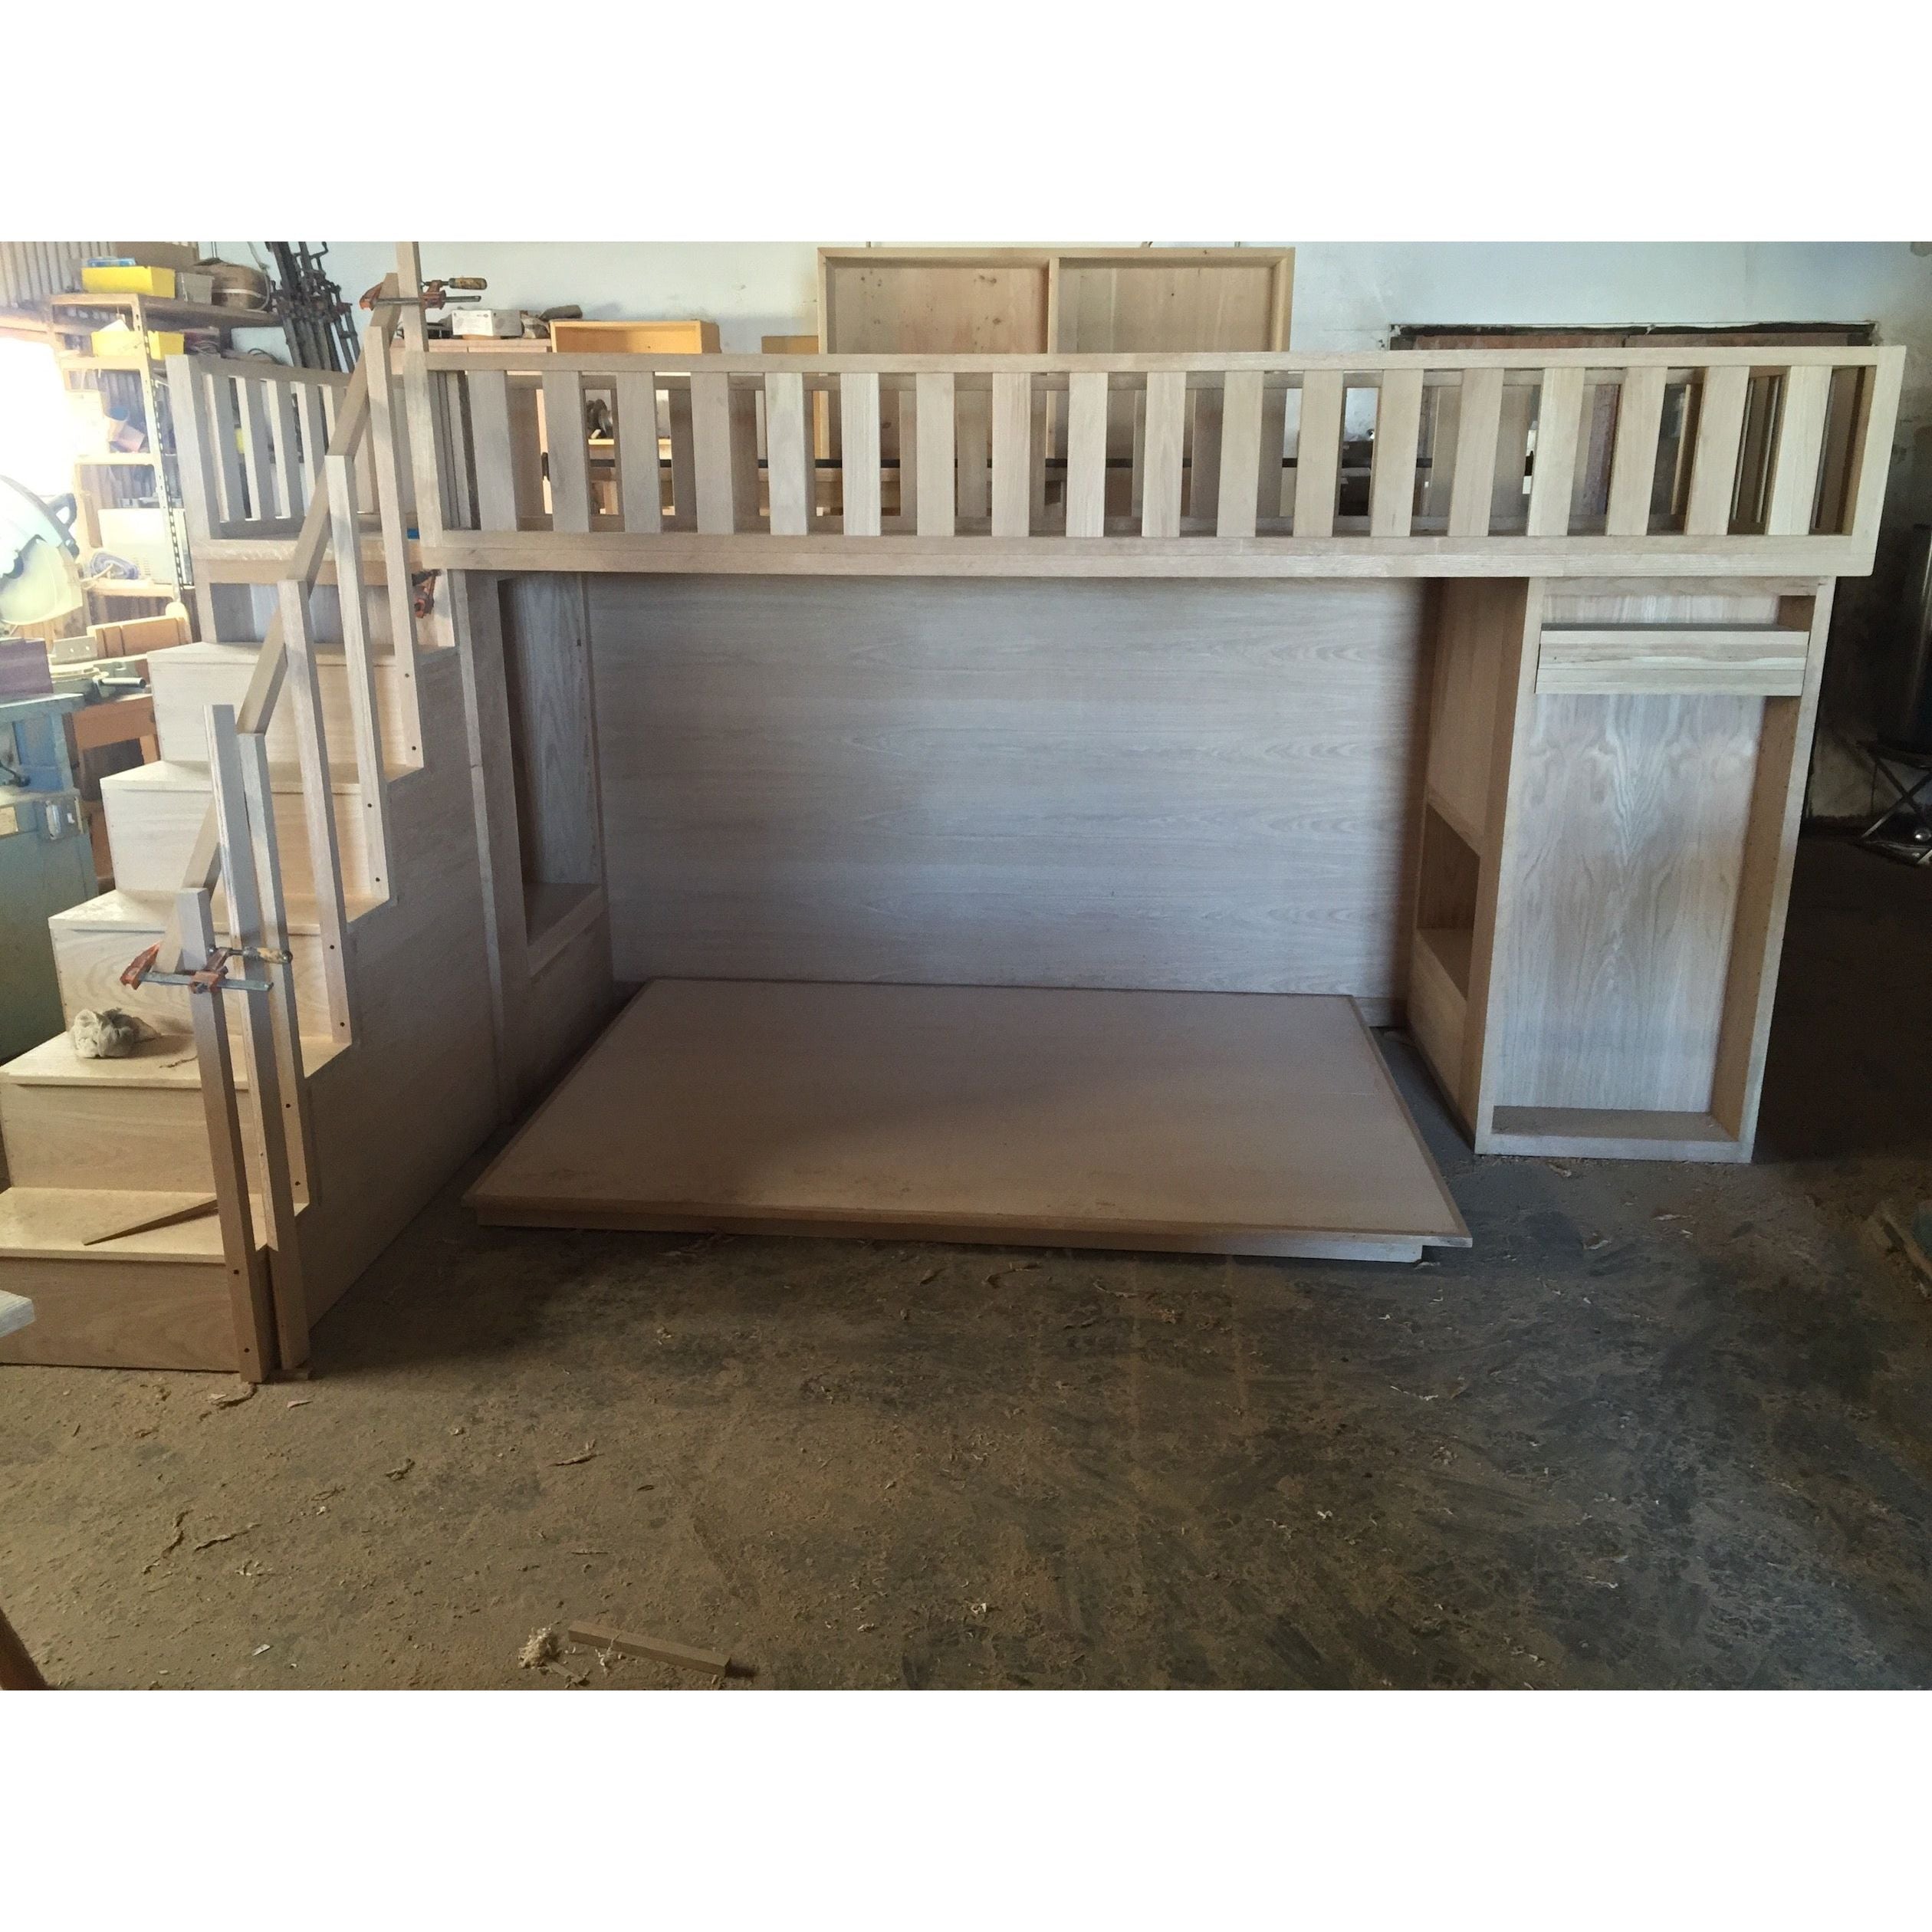 Fun Custom Designed Bunk Bed Built In White Oak Mortise Tenon